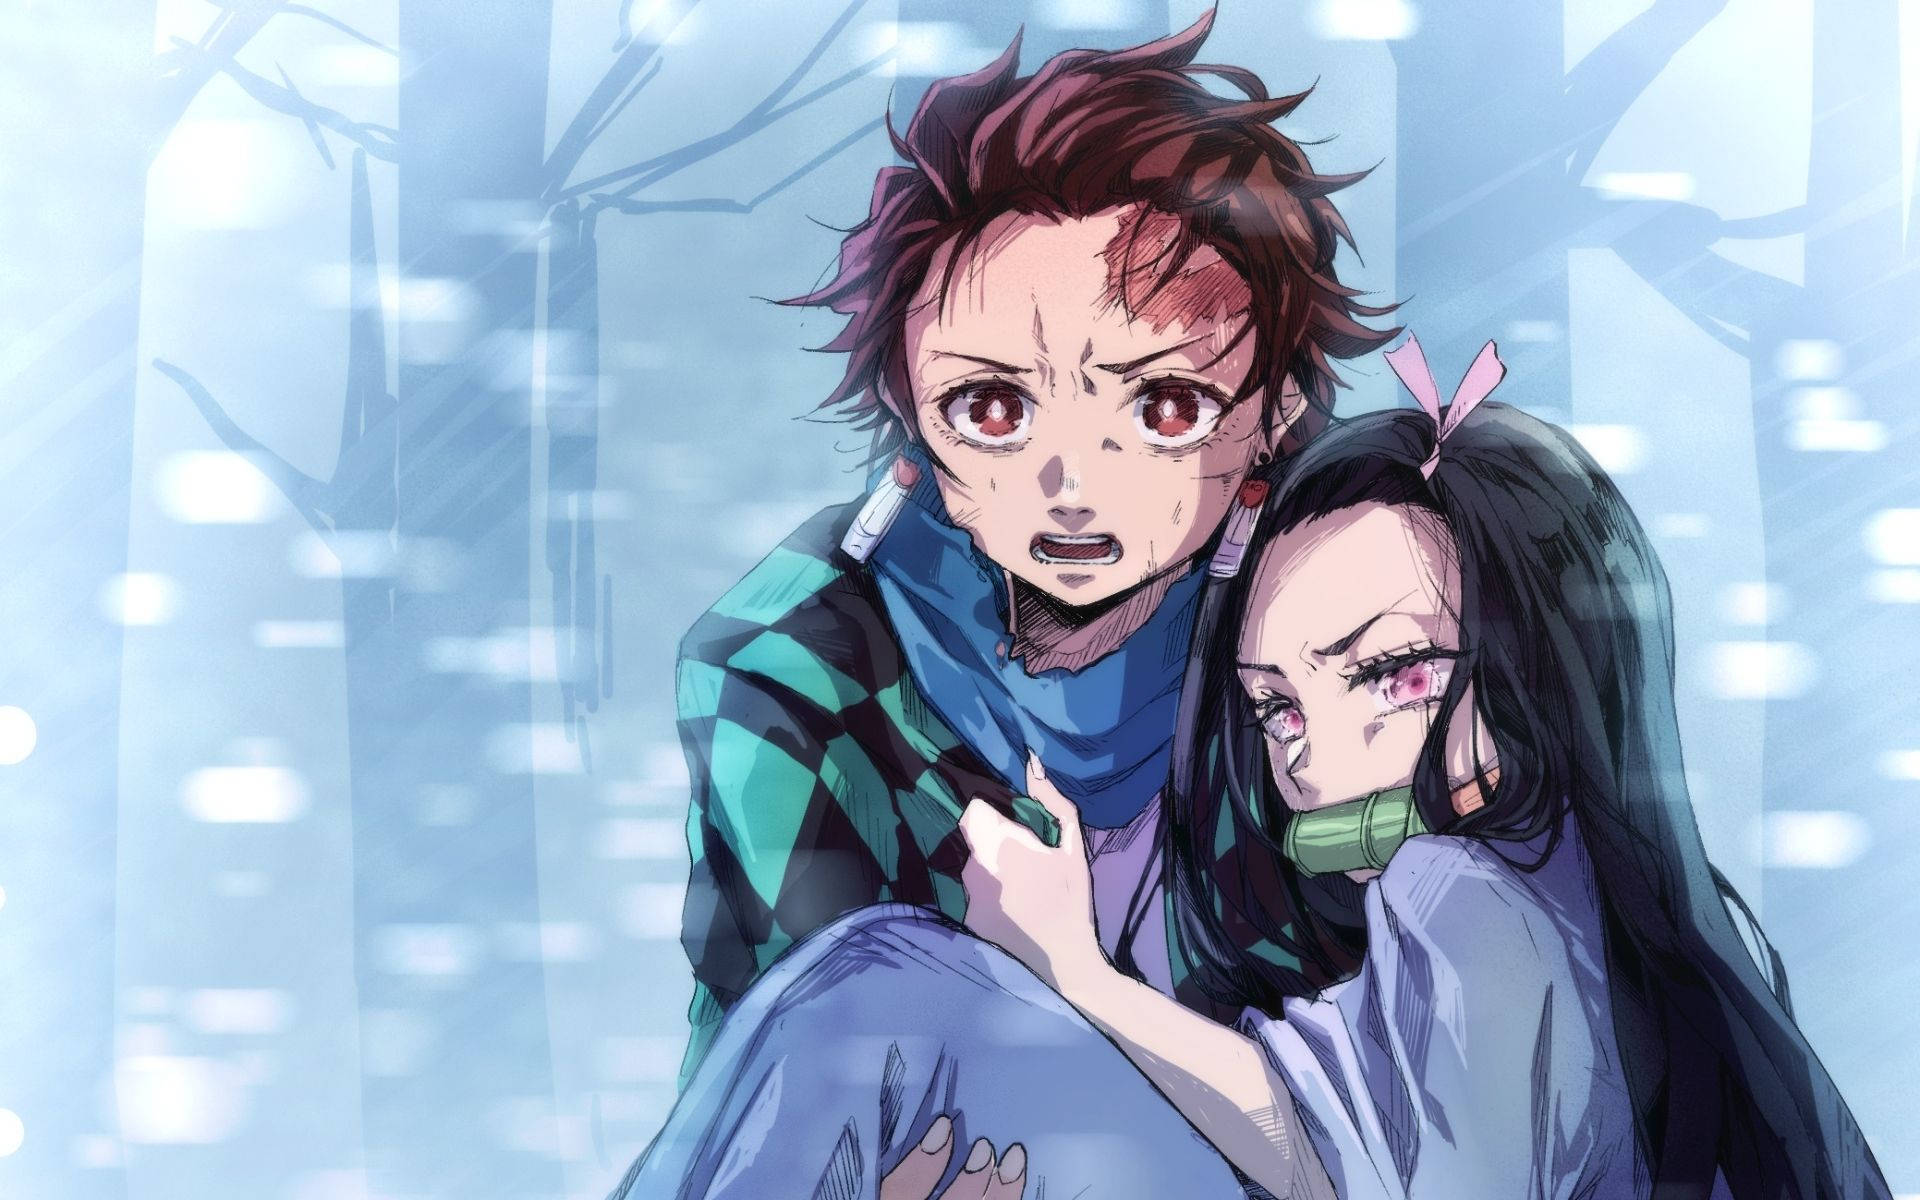 Nezuko is saved by her brave brother - Tanjiro Kamado. Wallpaper